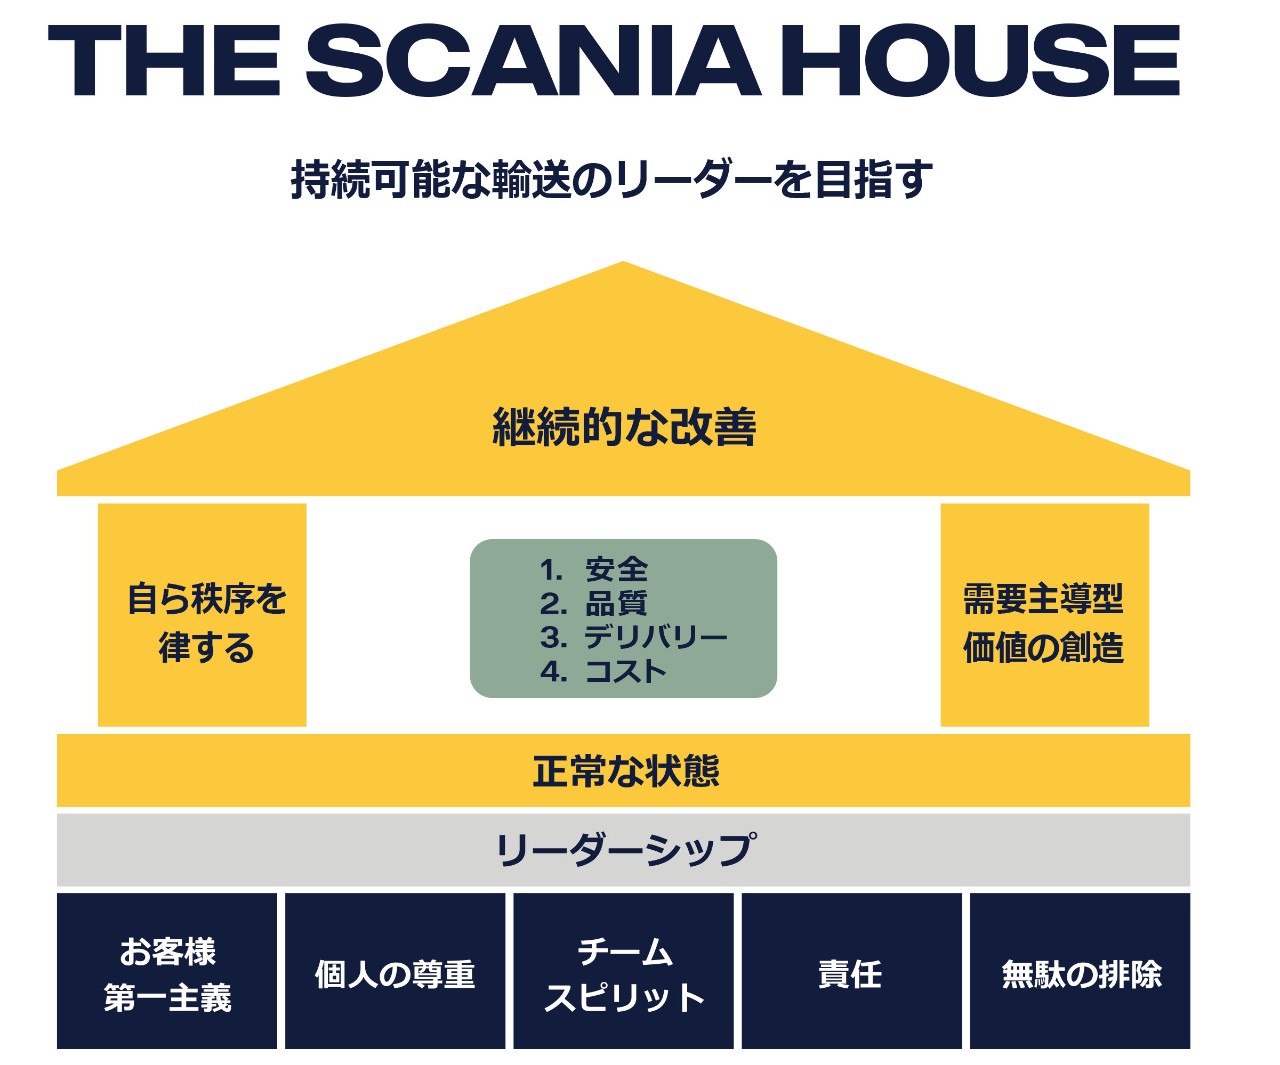 The Scania House